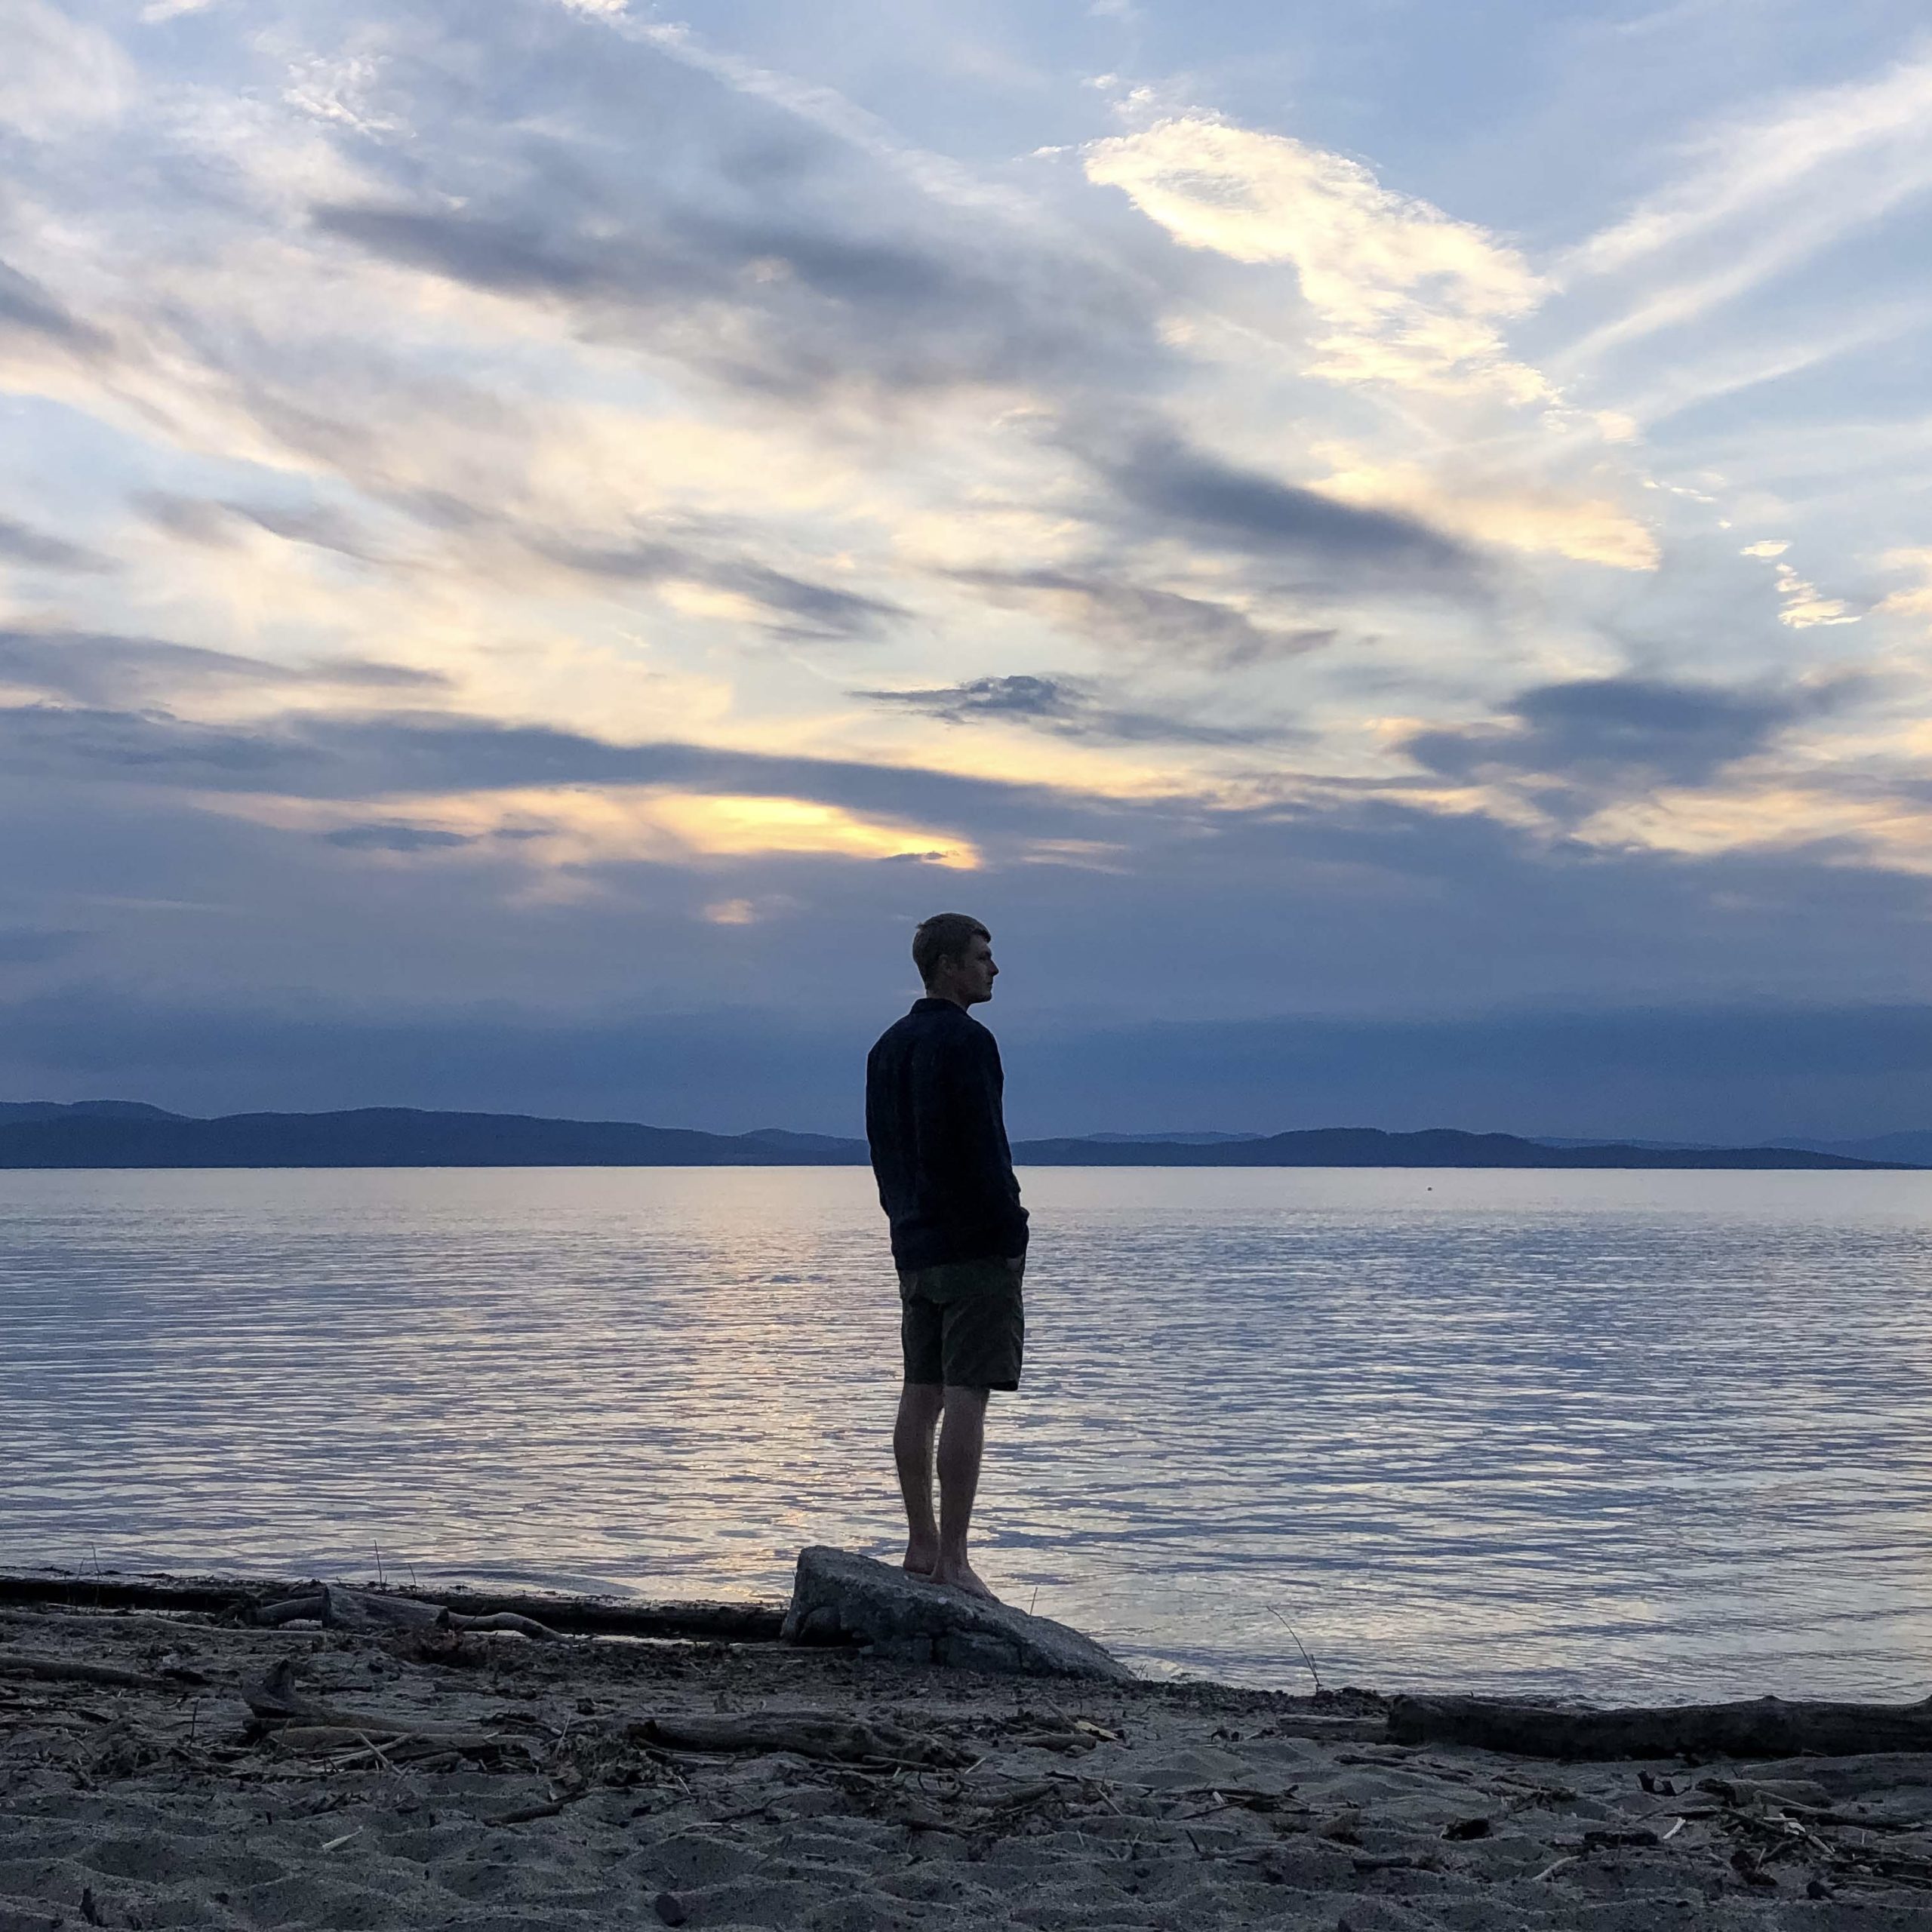 Enjoying lake Champlain, Vermont. PC: Sophia Allen